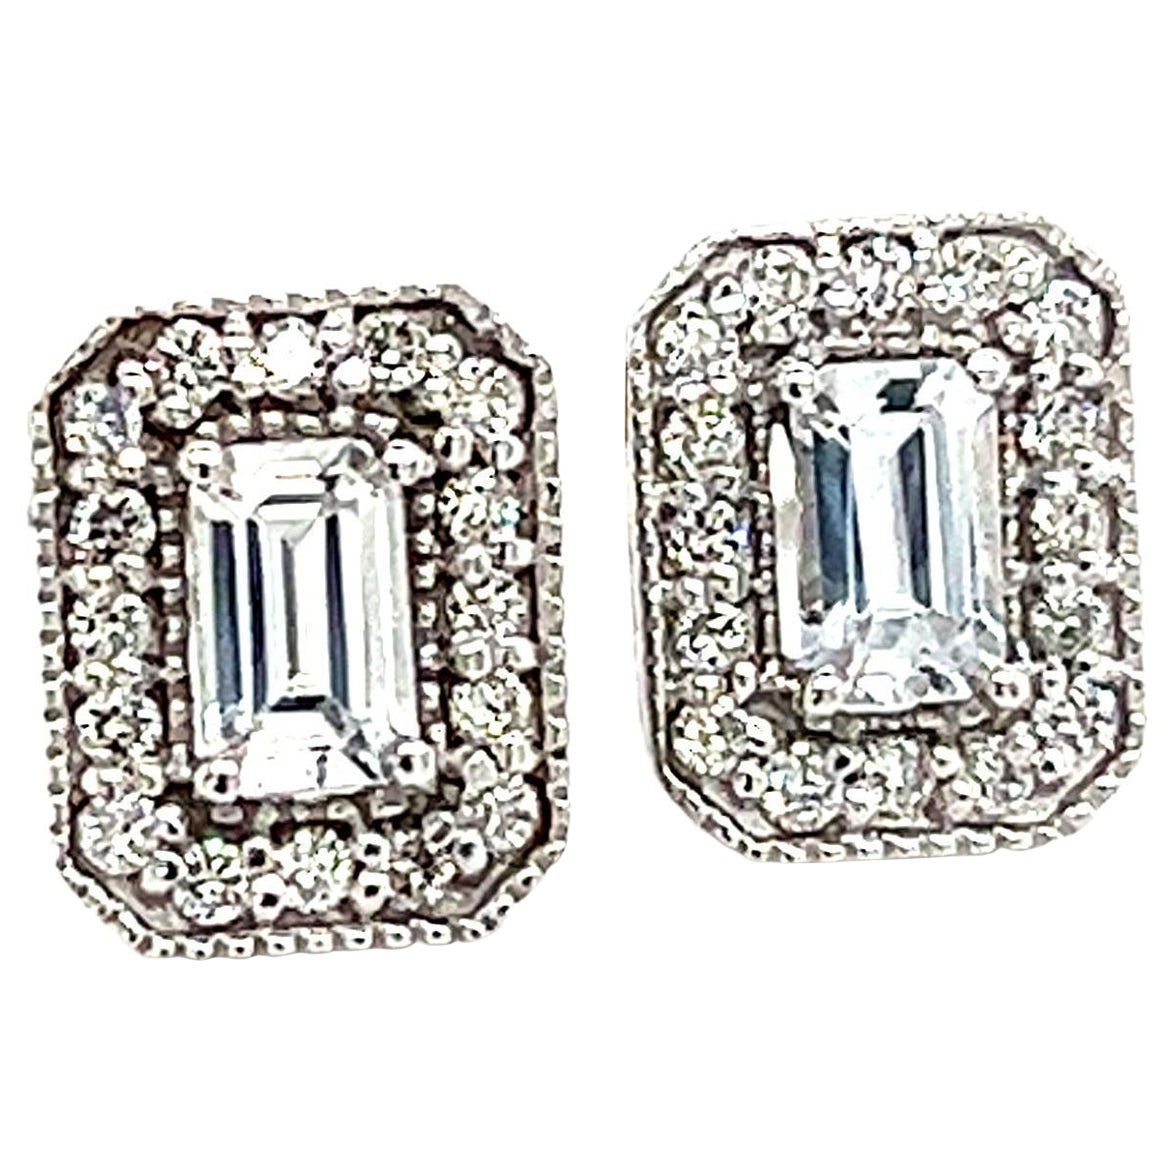 Natural Sapphire Diamond Stud Earrings 14k W Gold 0.96 TCW Certified